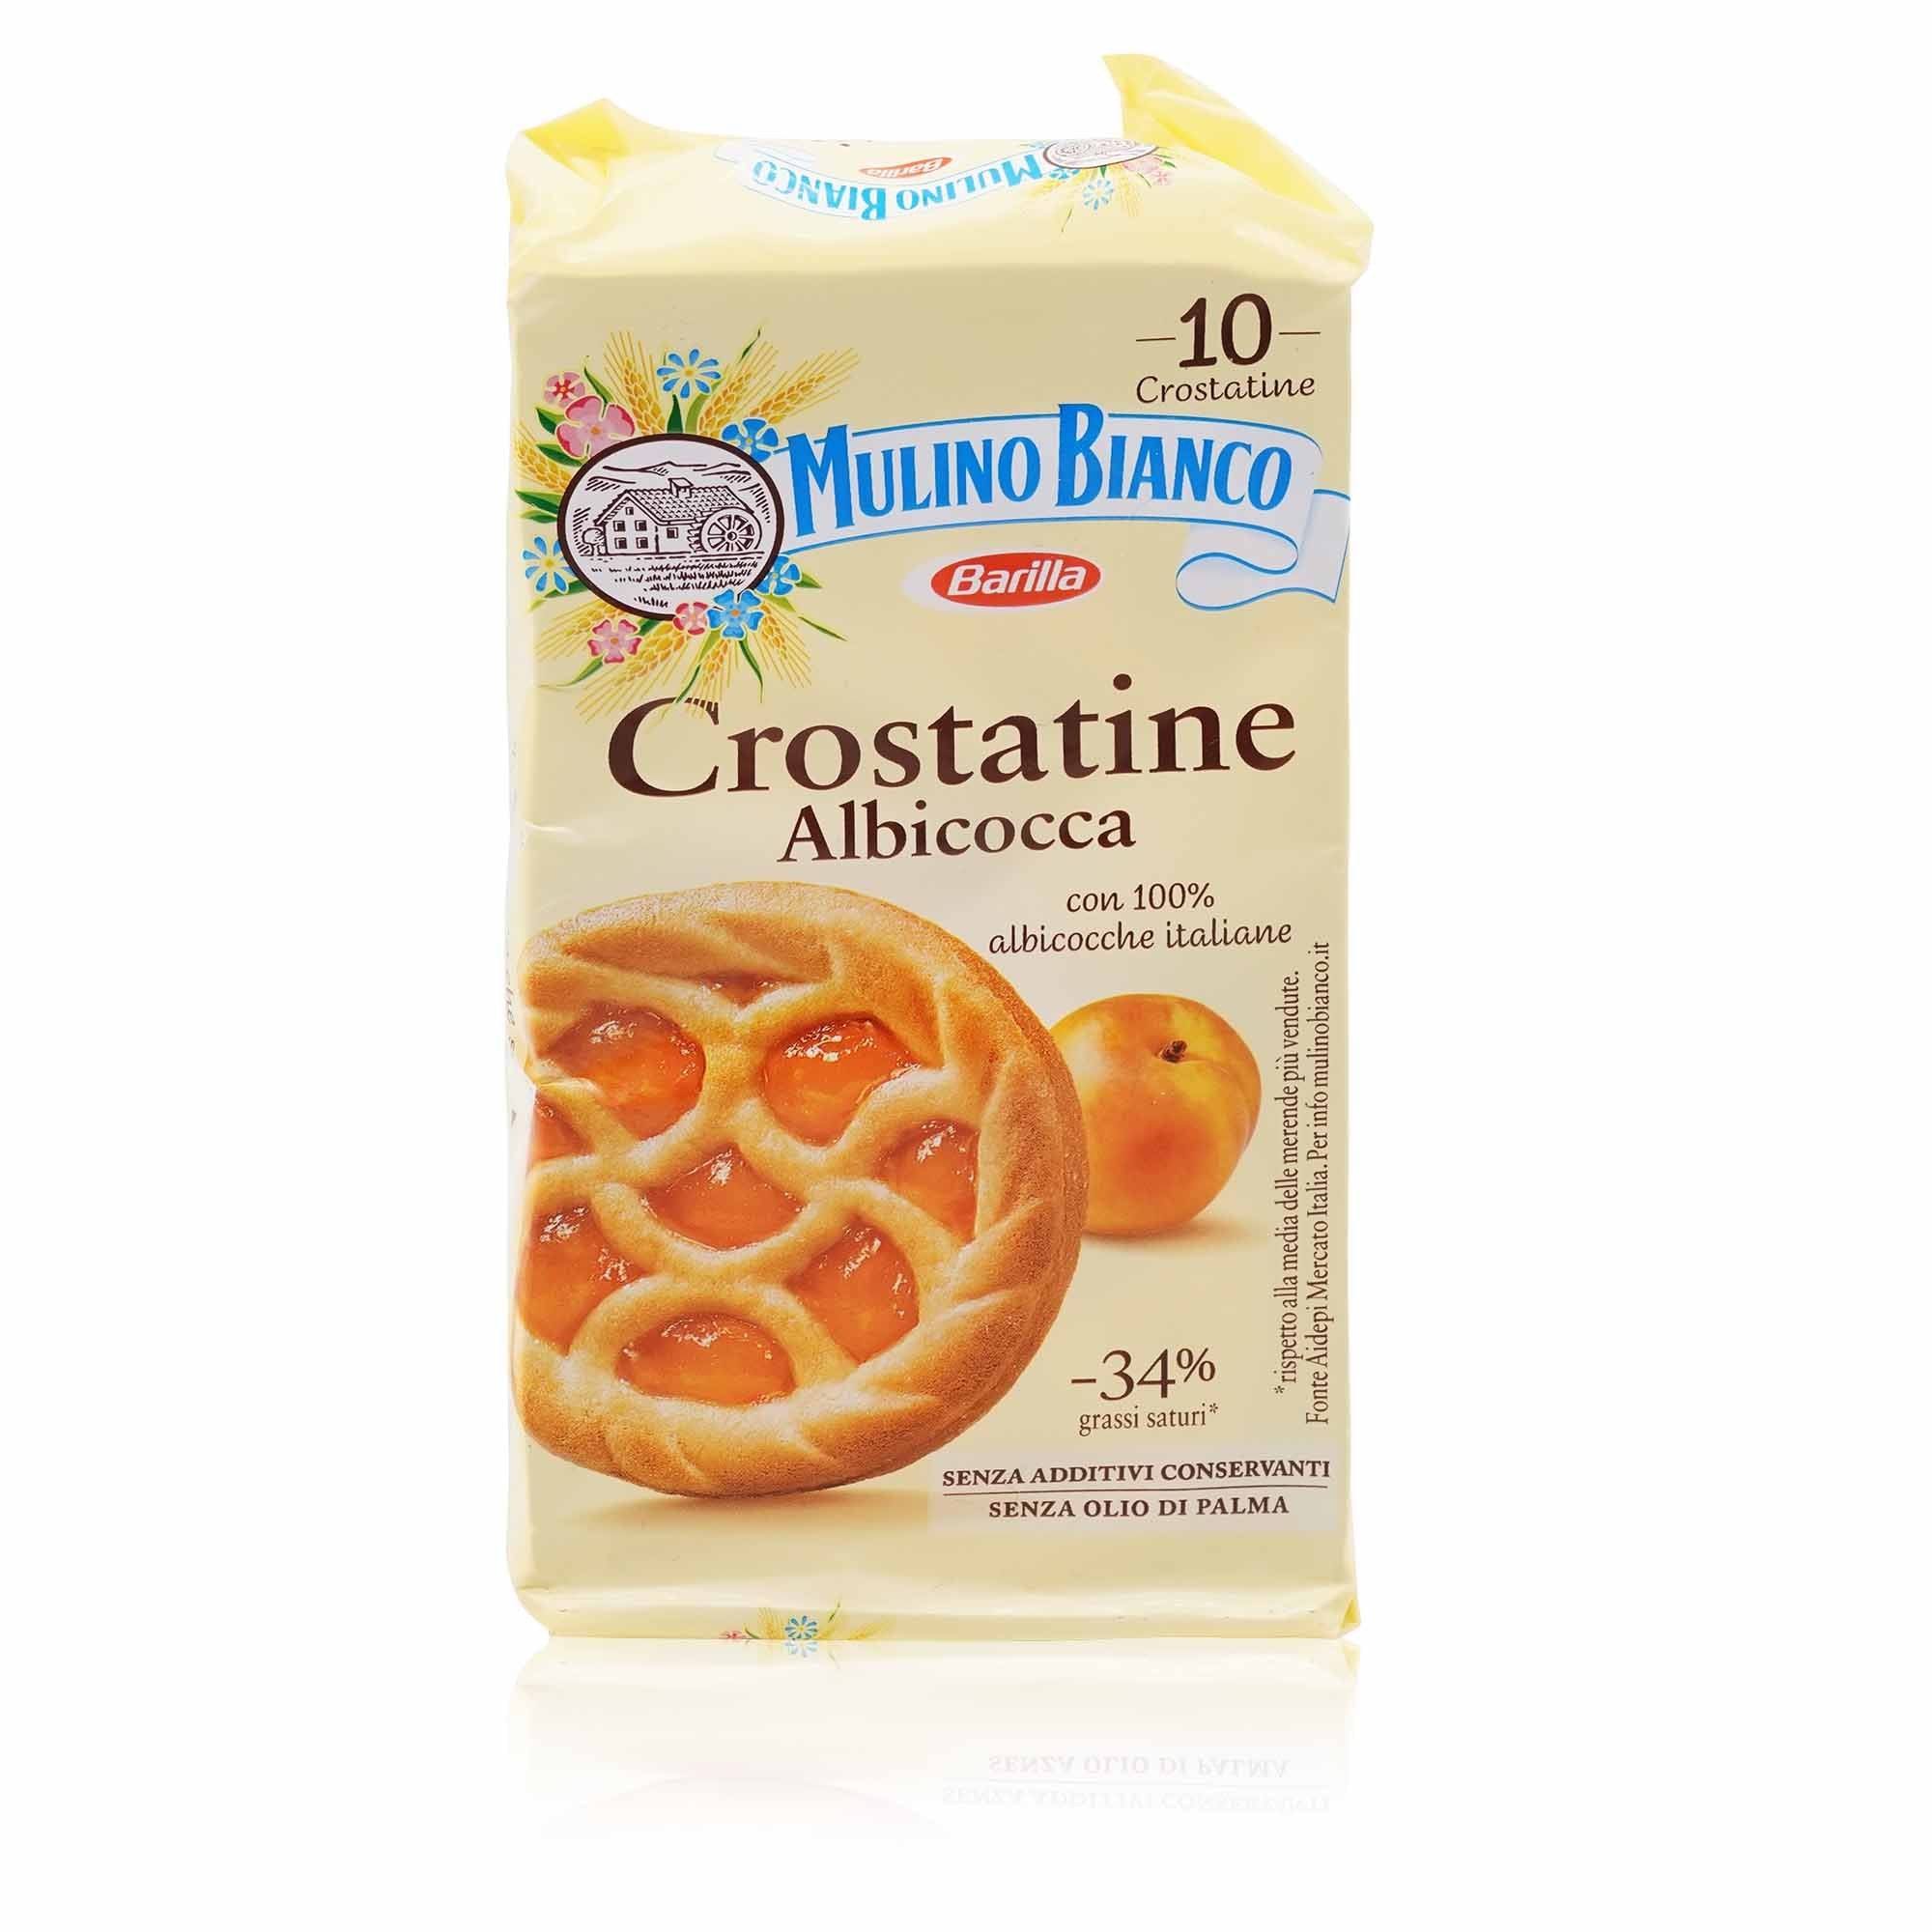 MULINO BIANCO Crostatine Albicocca – Törtchen mit Aprikosenkonfitüre - 0,400kg